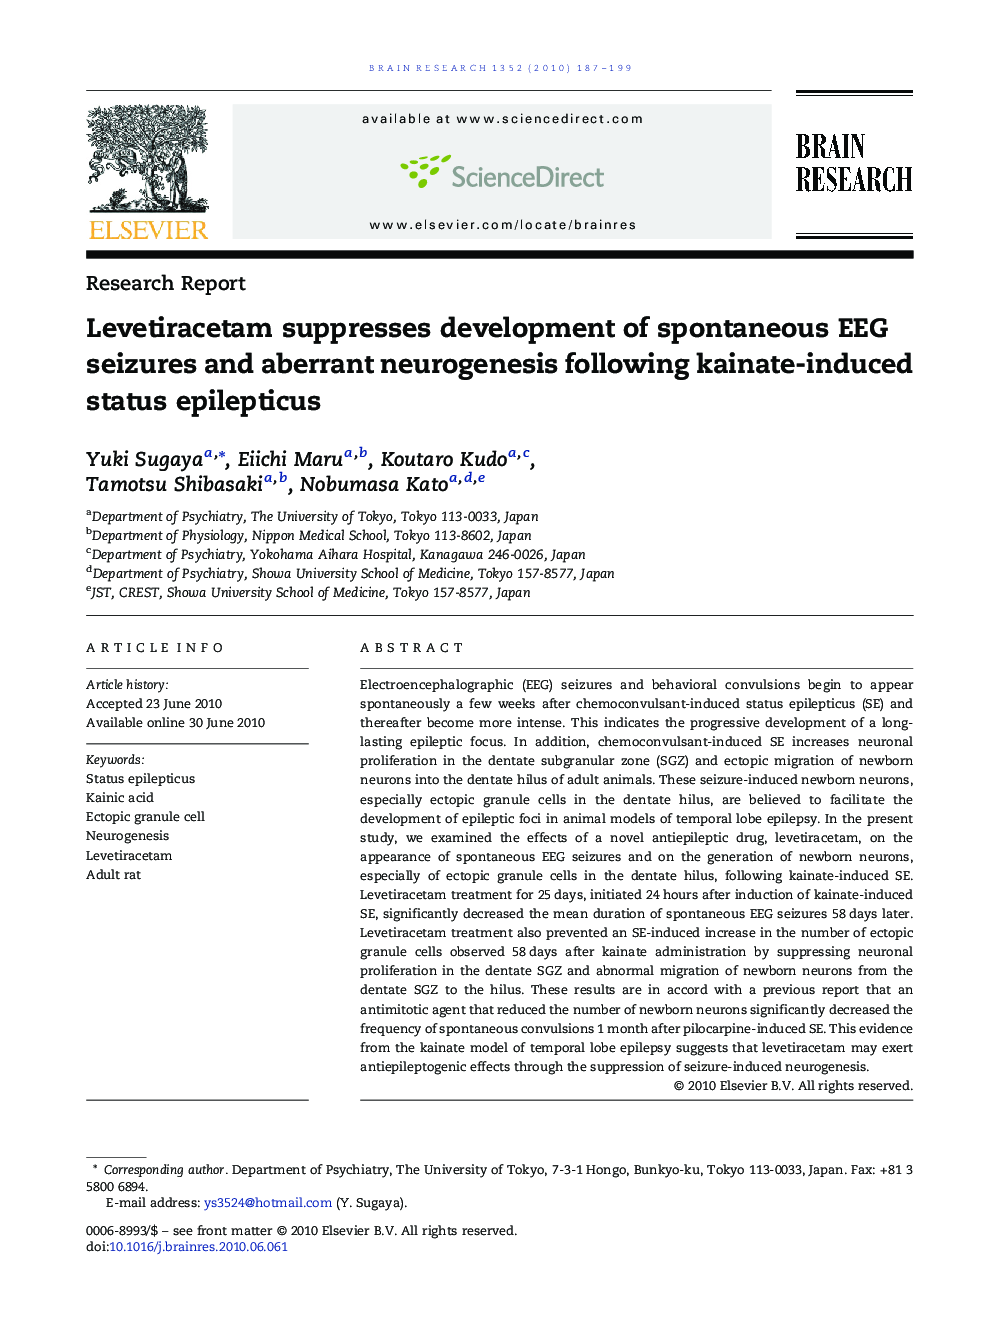 Levetiracetam suppresses development of spontaneous EEG seizures and aberrant neurogenesis following kainate-induced status epilepticus